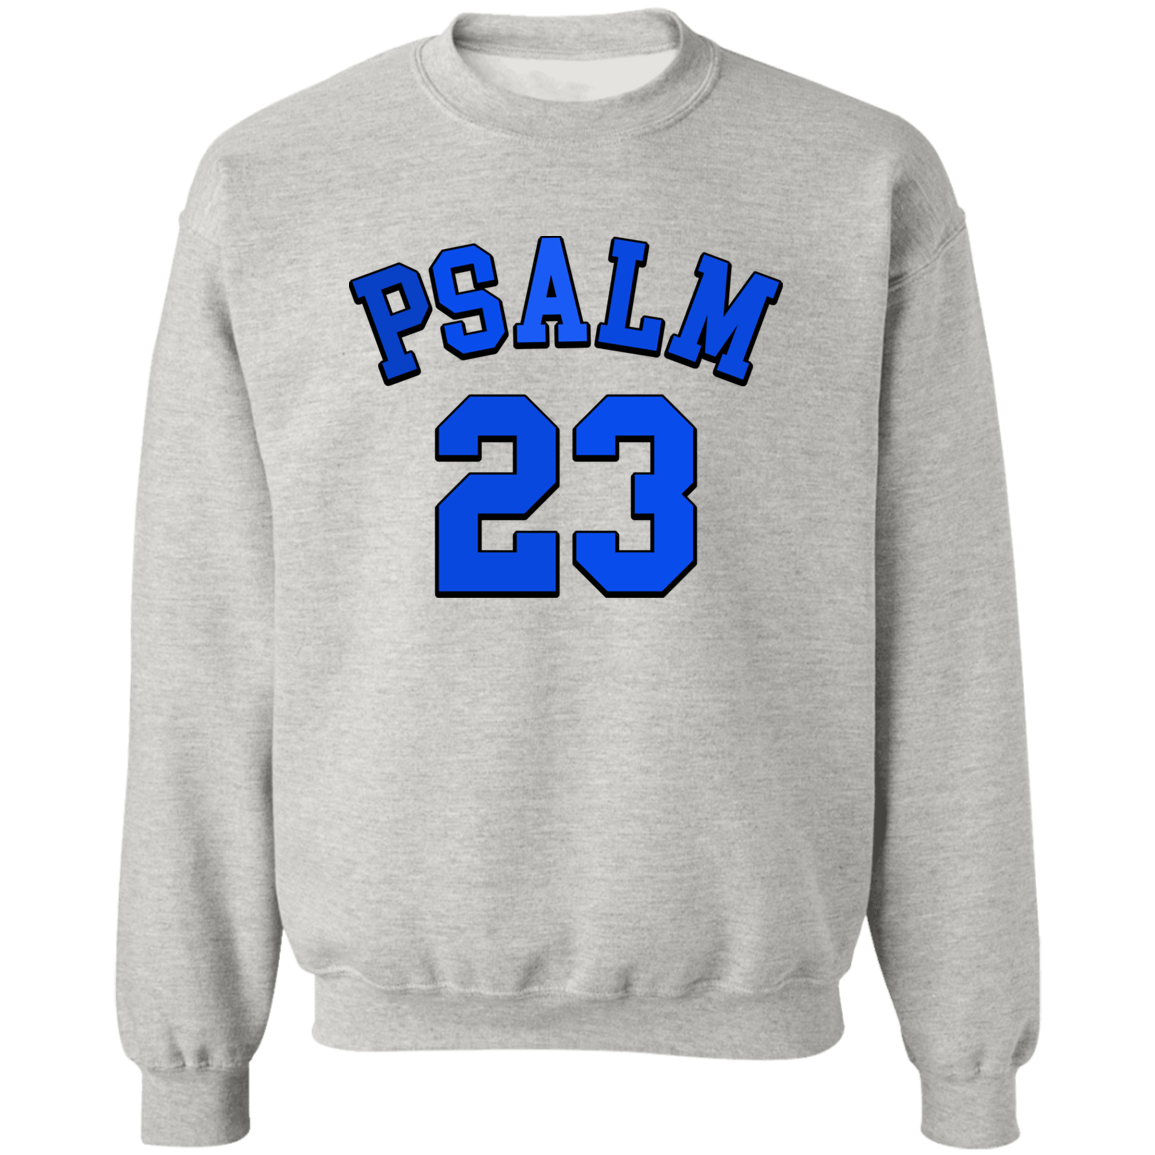 Psalm 23 Unisex Crewneck Sweatshirt